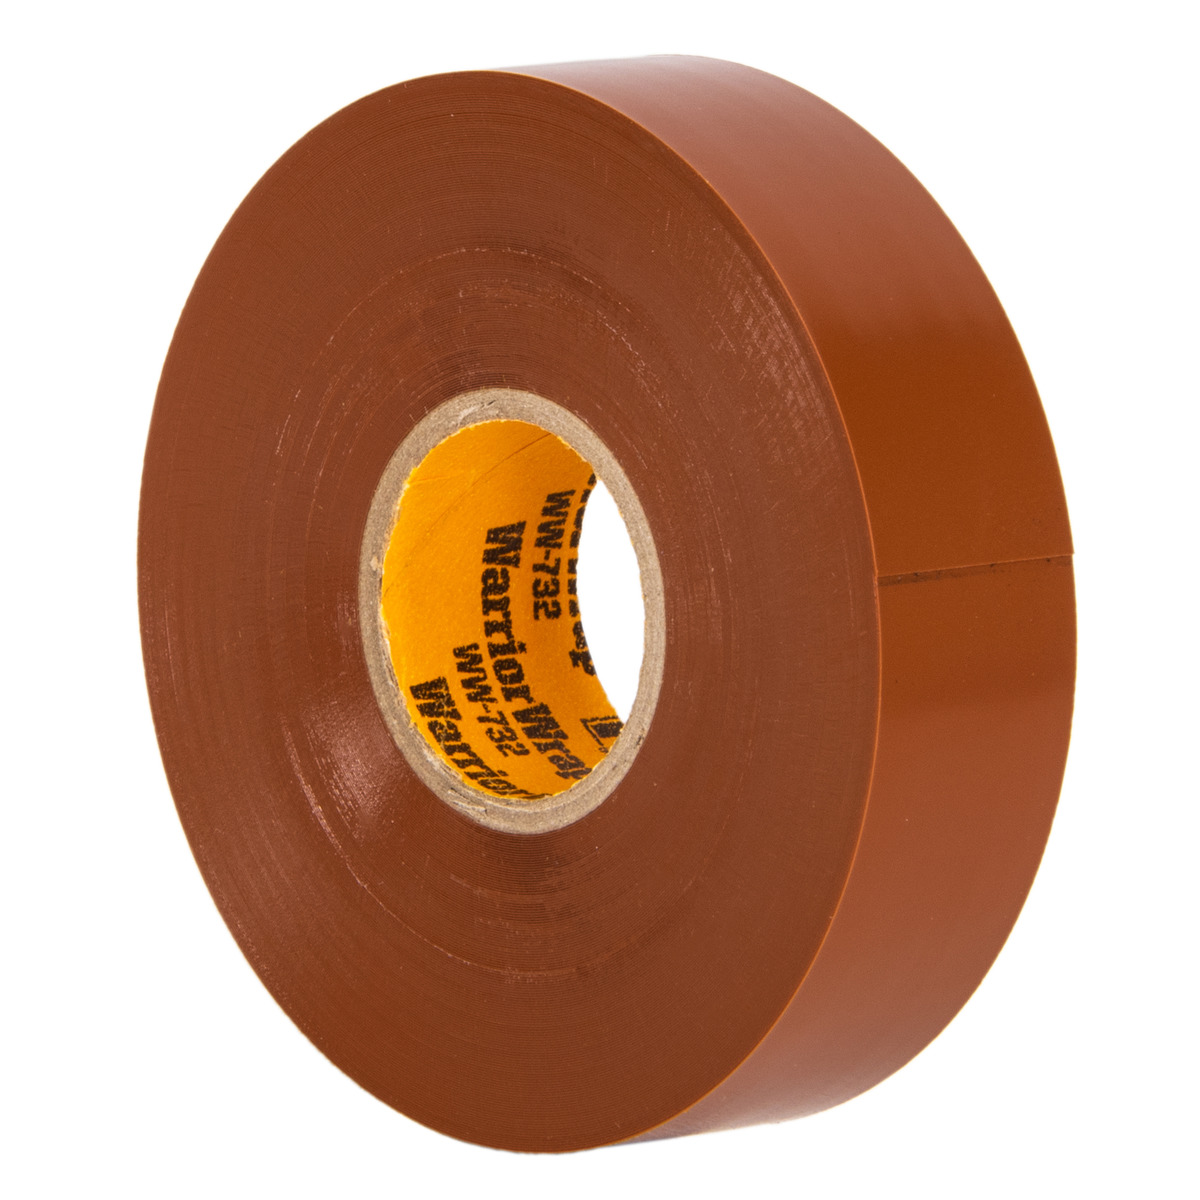 Voel me slecht Onderscheiden Pracht Professional Brown Vinyl Electrical Tape, 7mil, 66ft Long - NSI Industries